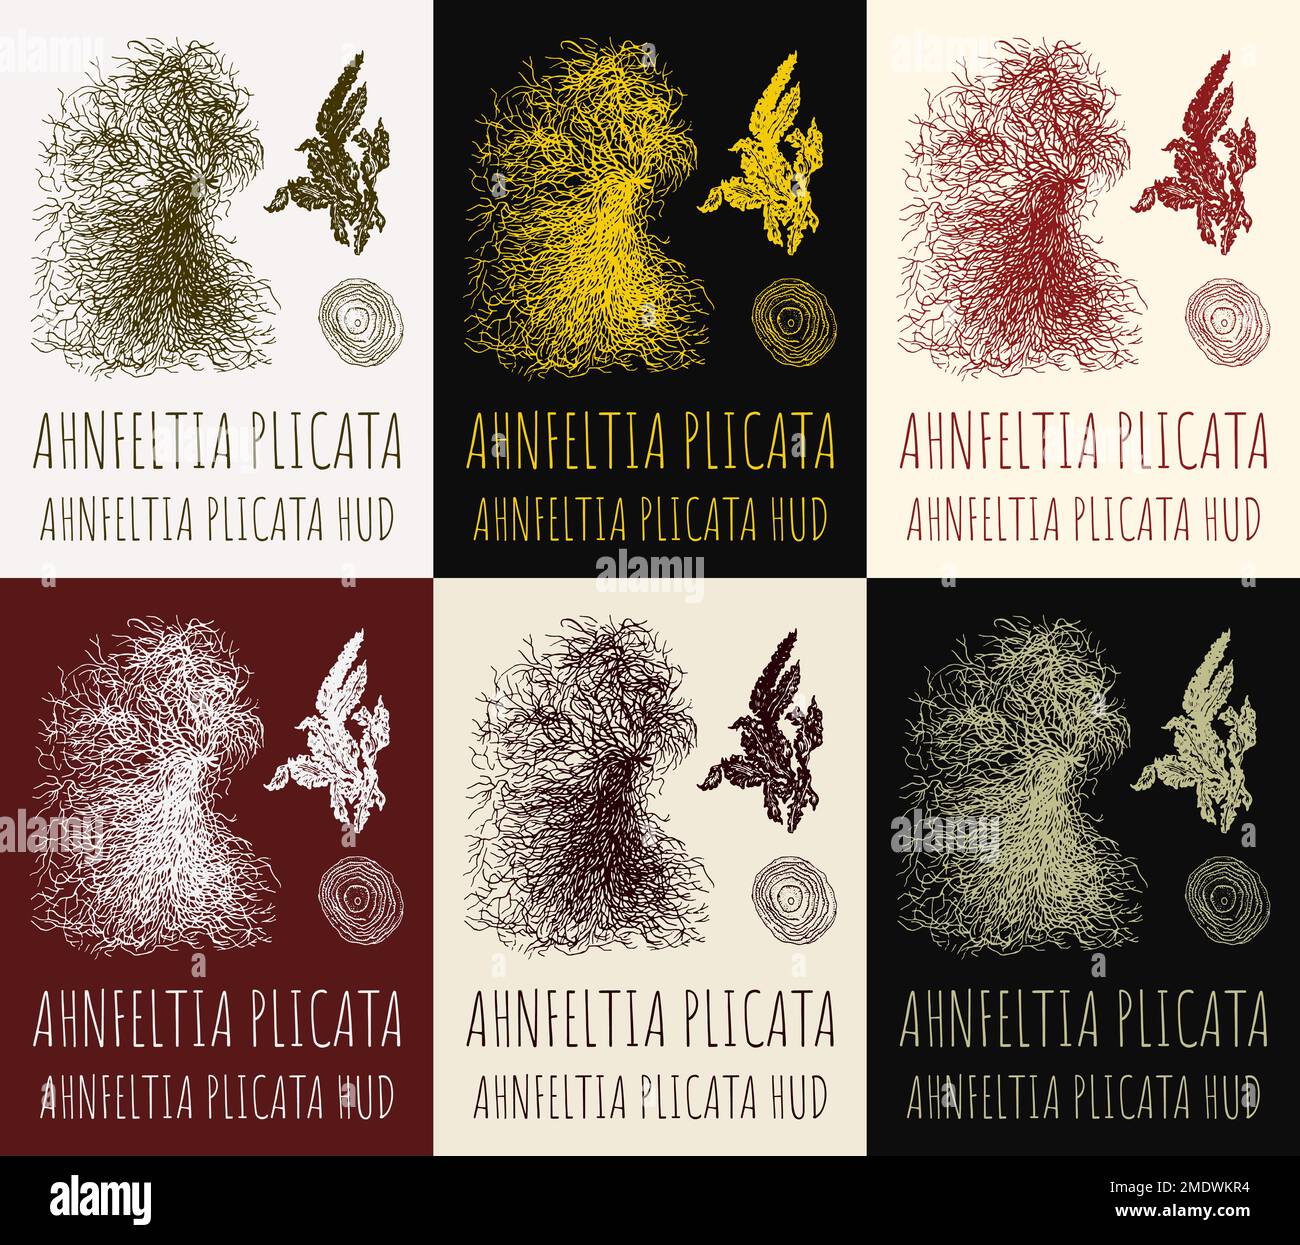 Set of drawings AHNFELTIA in different colors. Hand drawn illustration. Latin name AHNFELTIA PLICATA HUD. Stock Photo